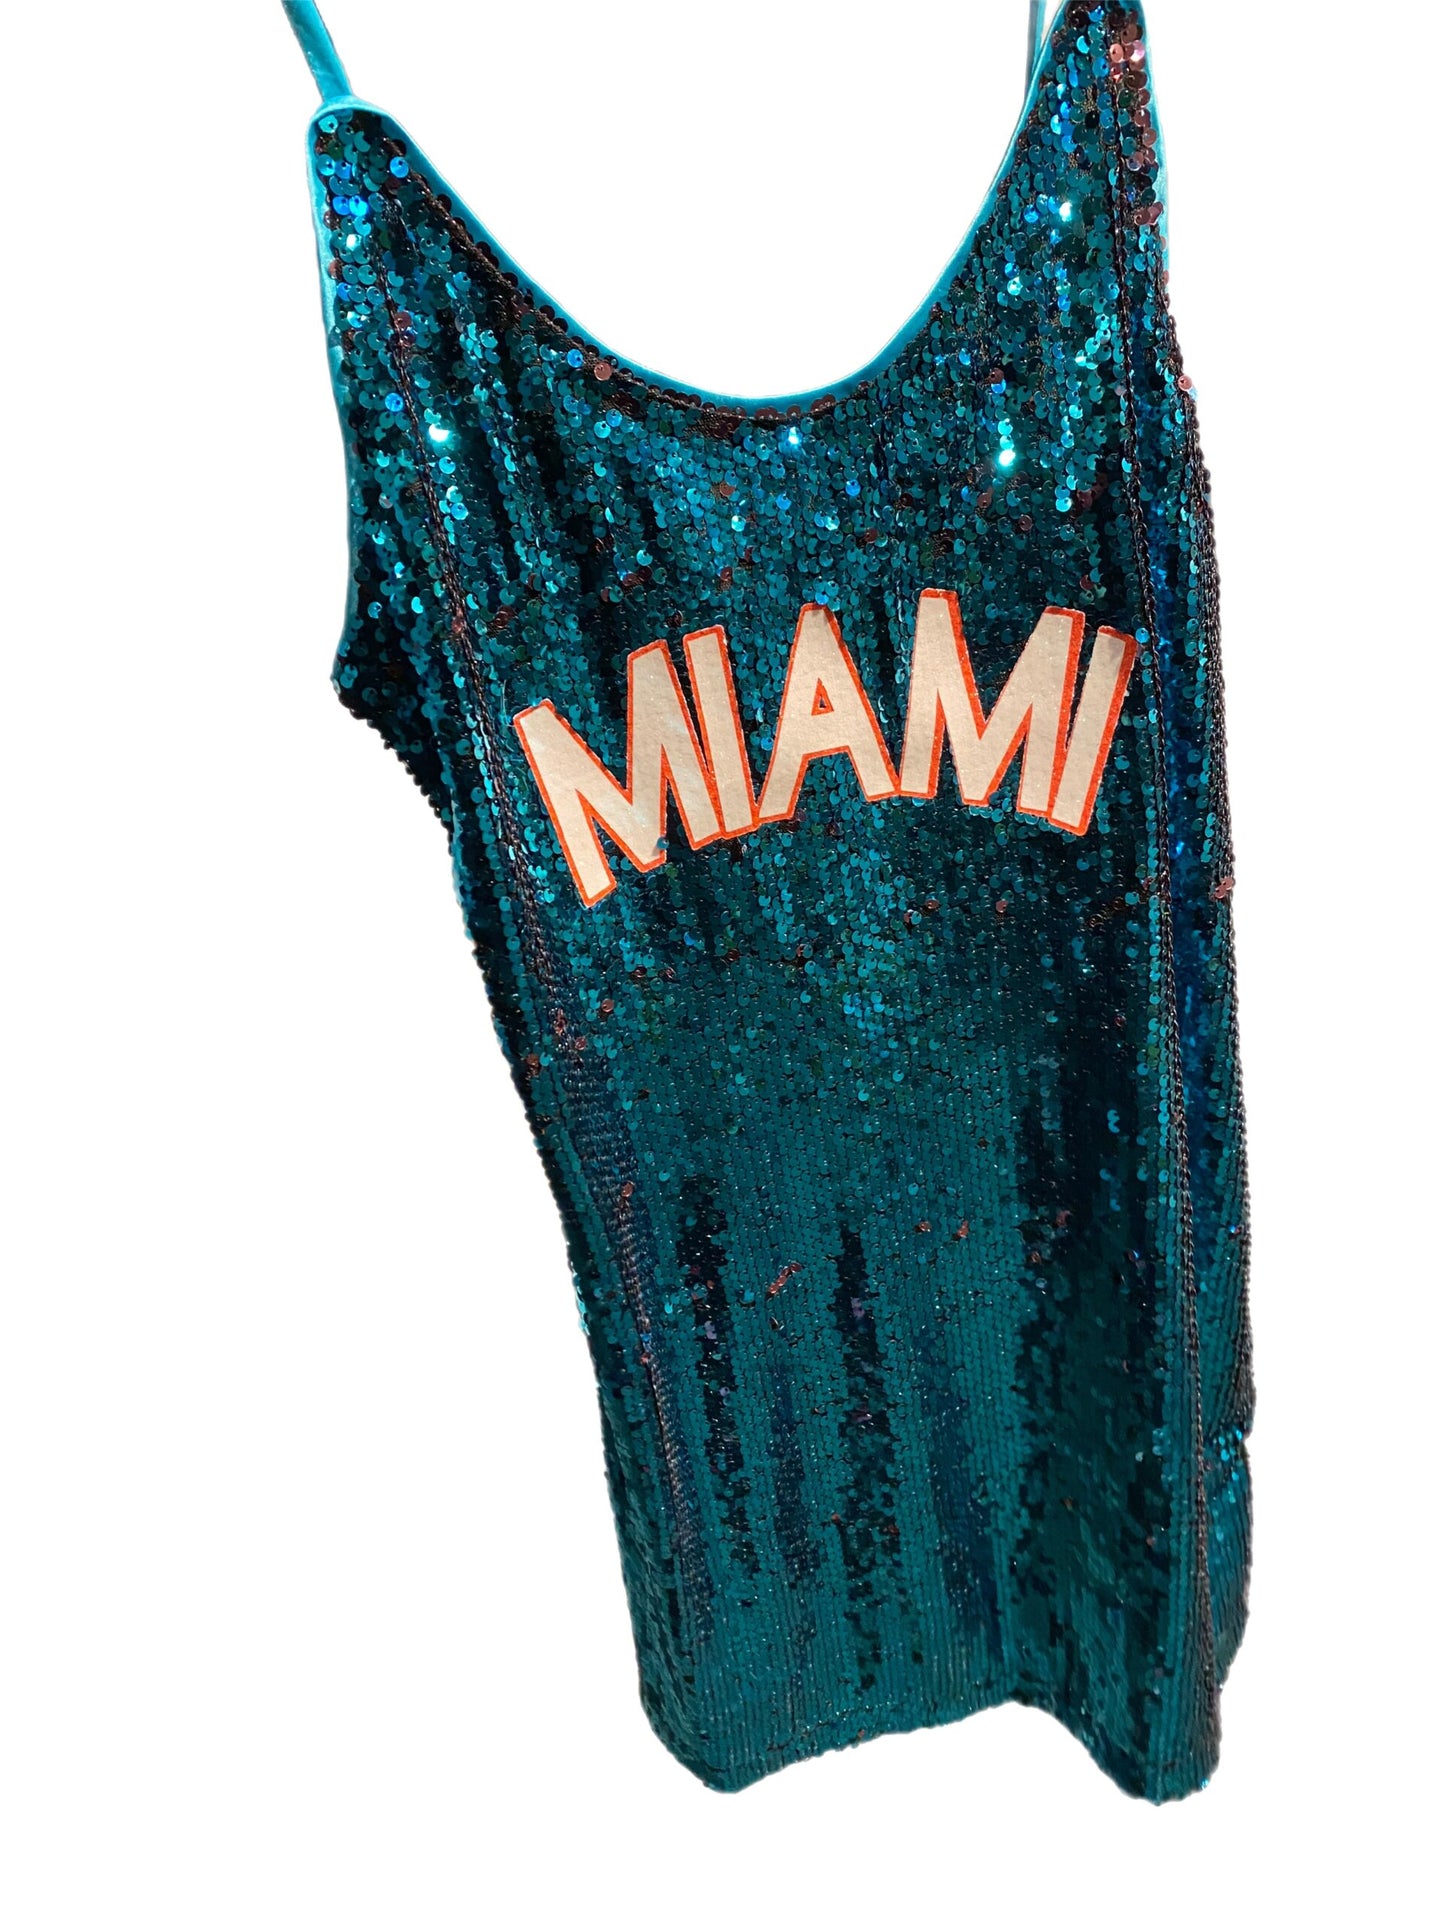 Miami Sequin Dress